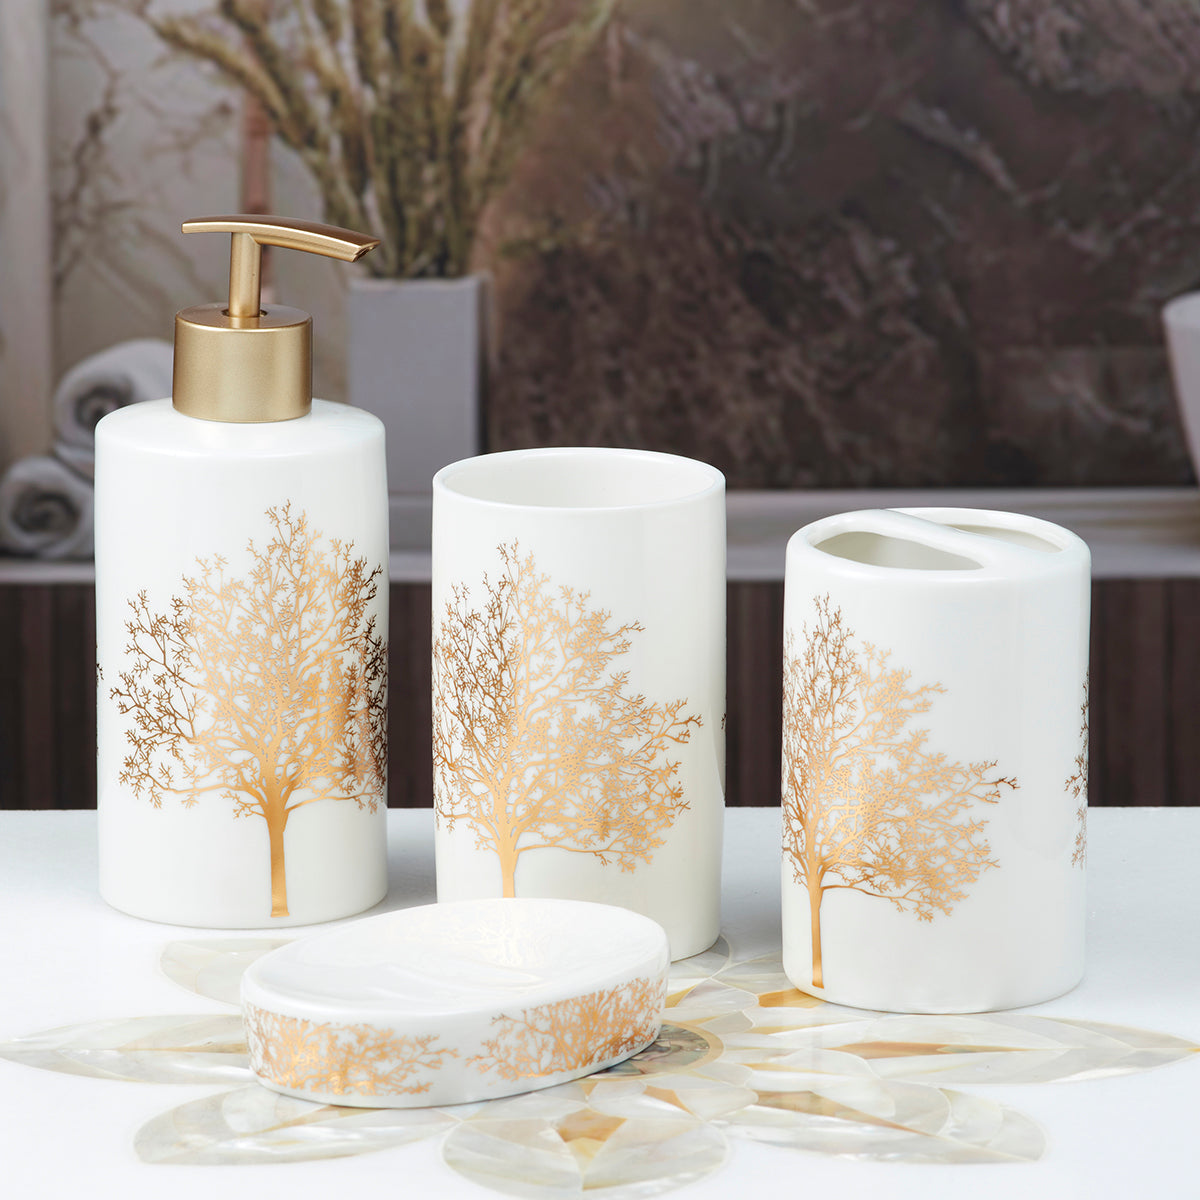 Ceramic Bathroom Accessories Set of 4 Bath Set with Soap Dispenser (10083)